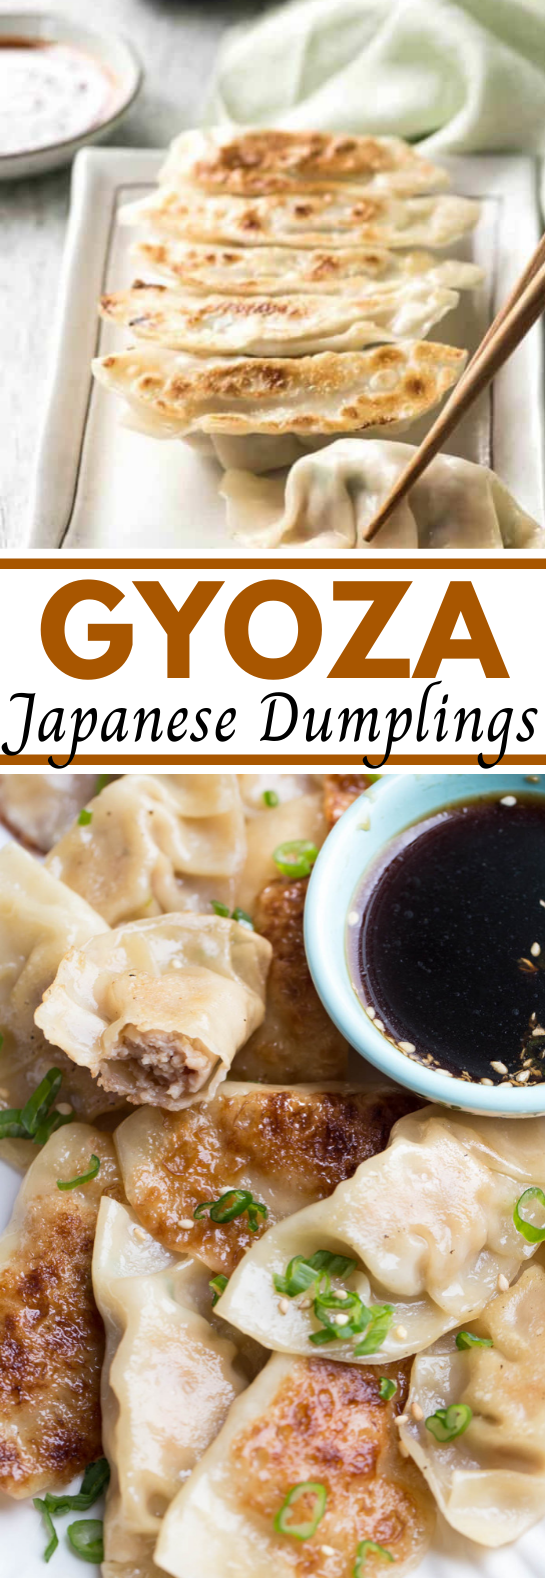 GYOZA (Japanese Dumplings) #appetizers #dinner #japanese #recipes #asianfood